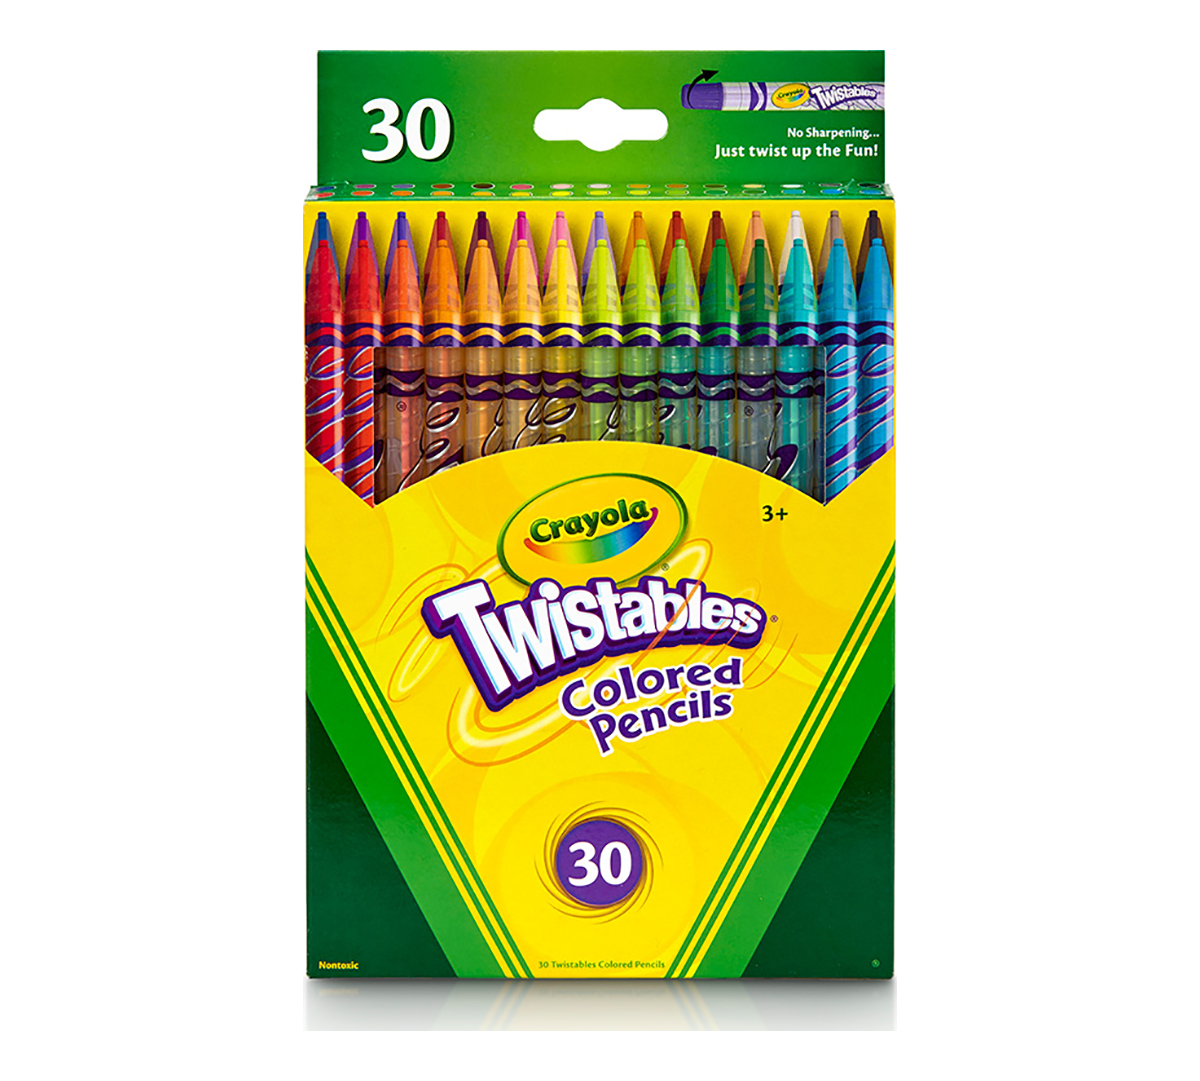 Download Crayola Twistables Colored Pencils, Always Sharp, Art Tools for Kids, 30 Count | Crayola